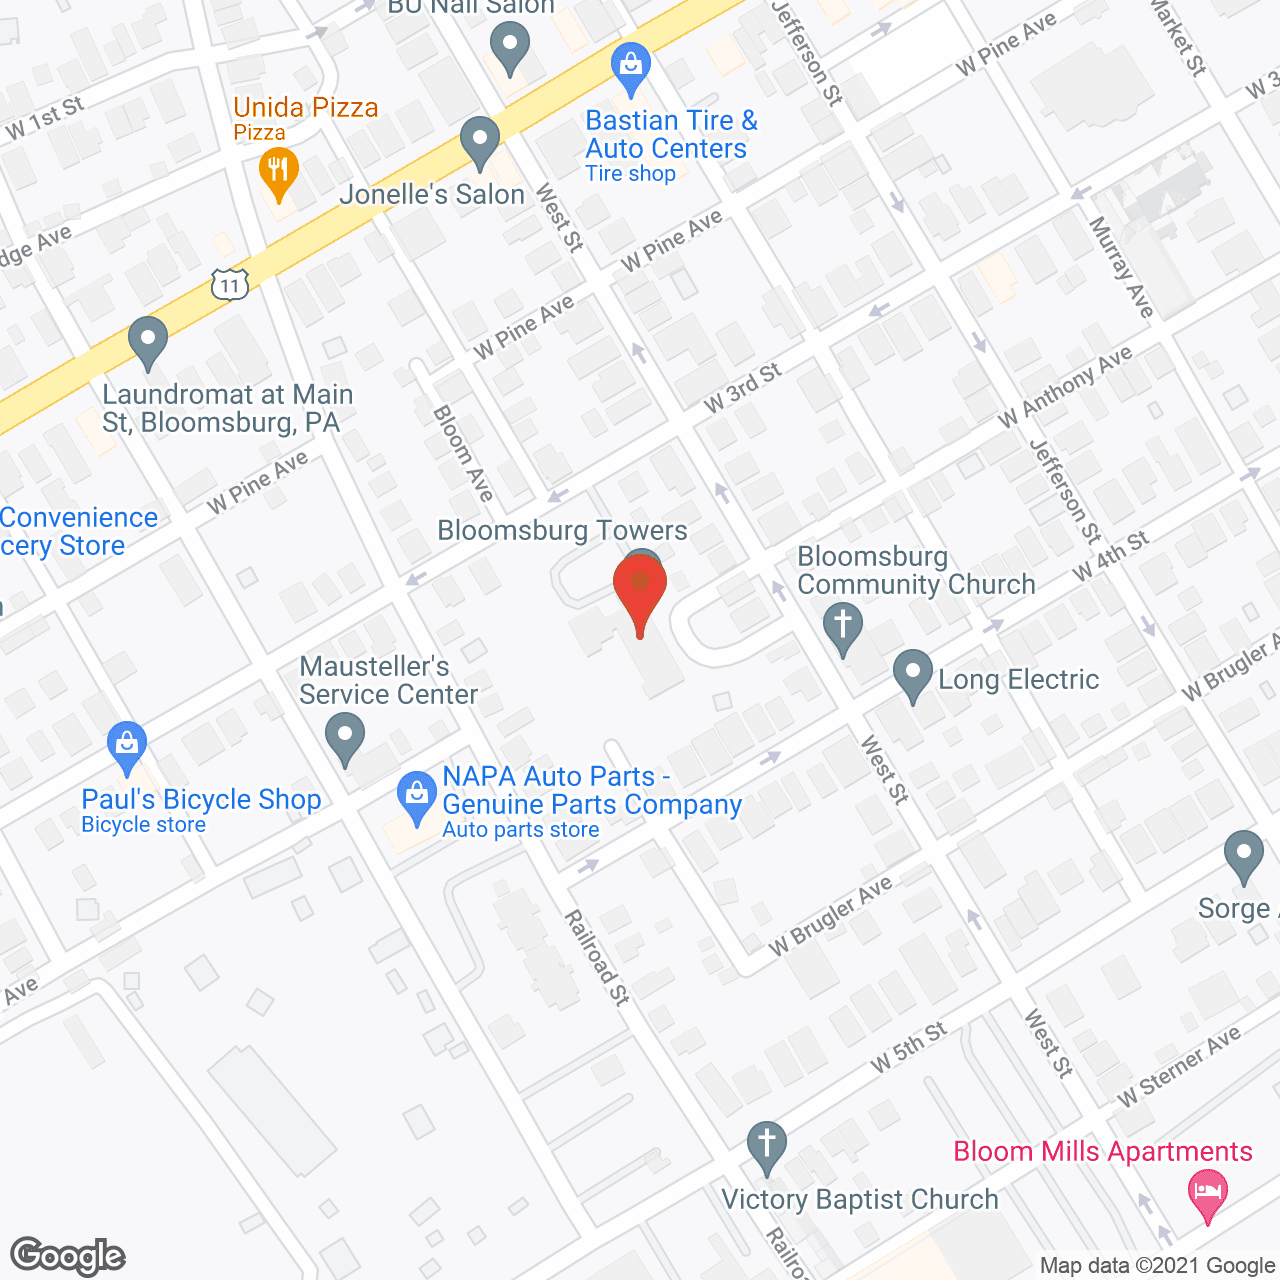 Bloomsburg Towers in google map